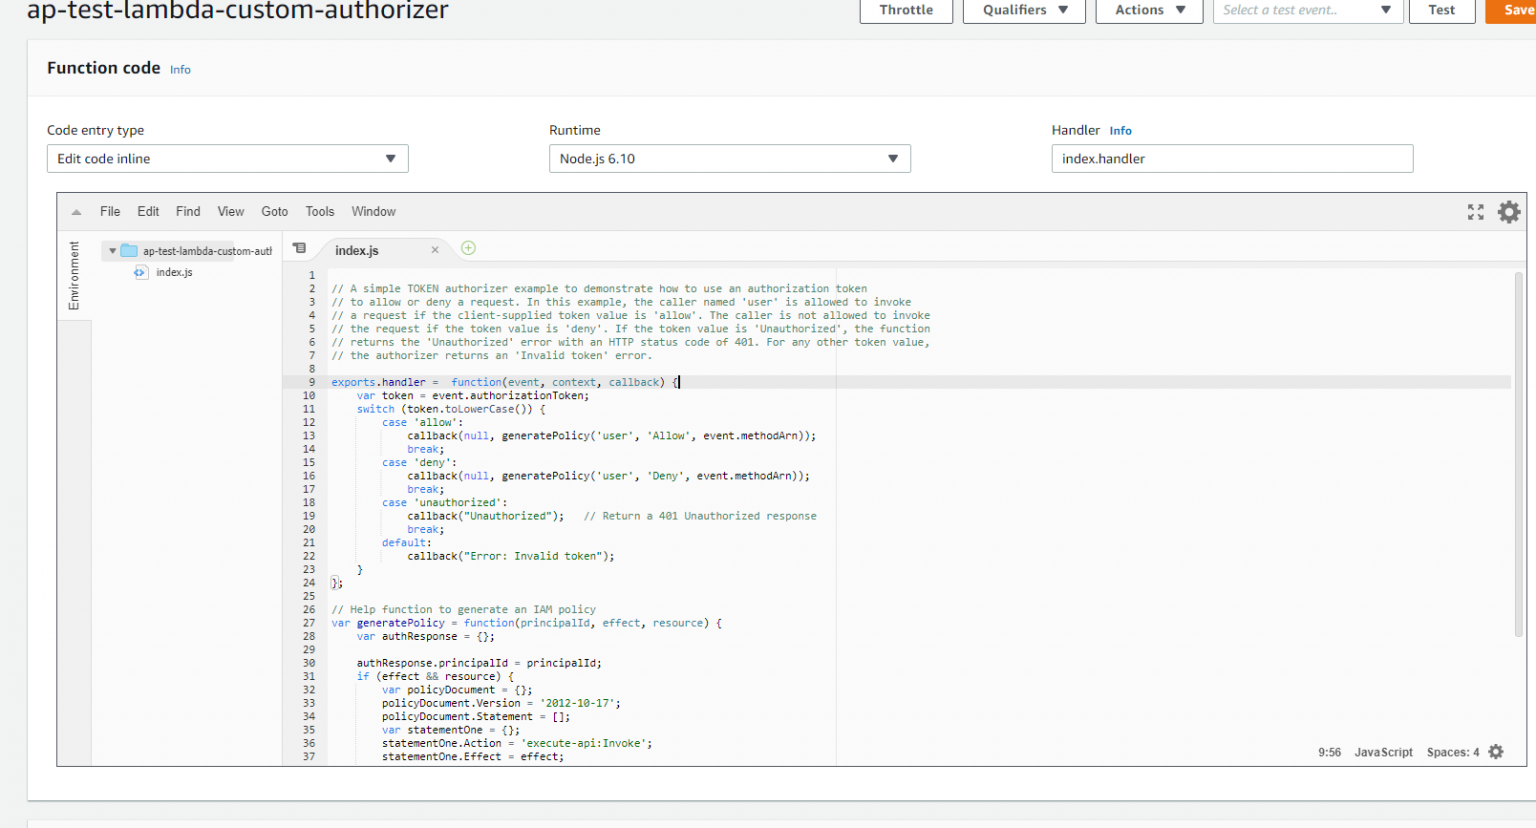 screenshot create custom lambda function example code